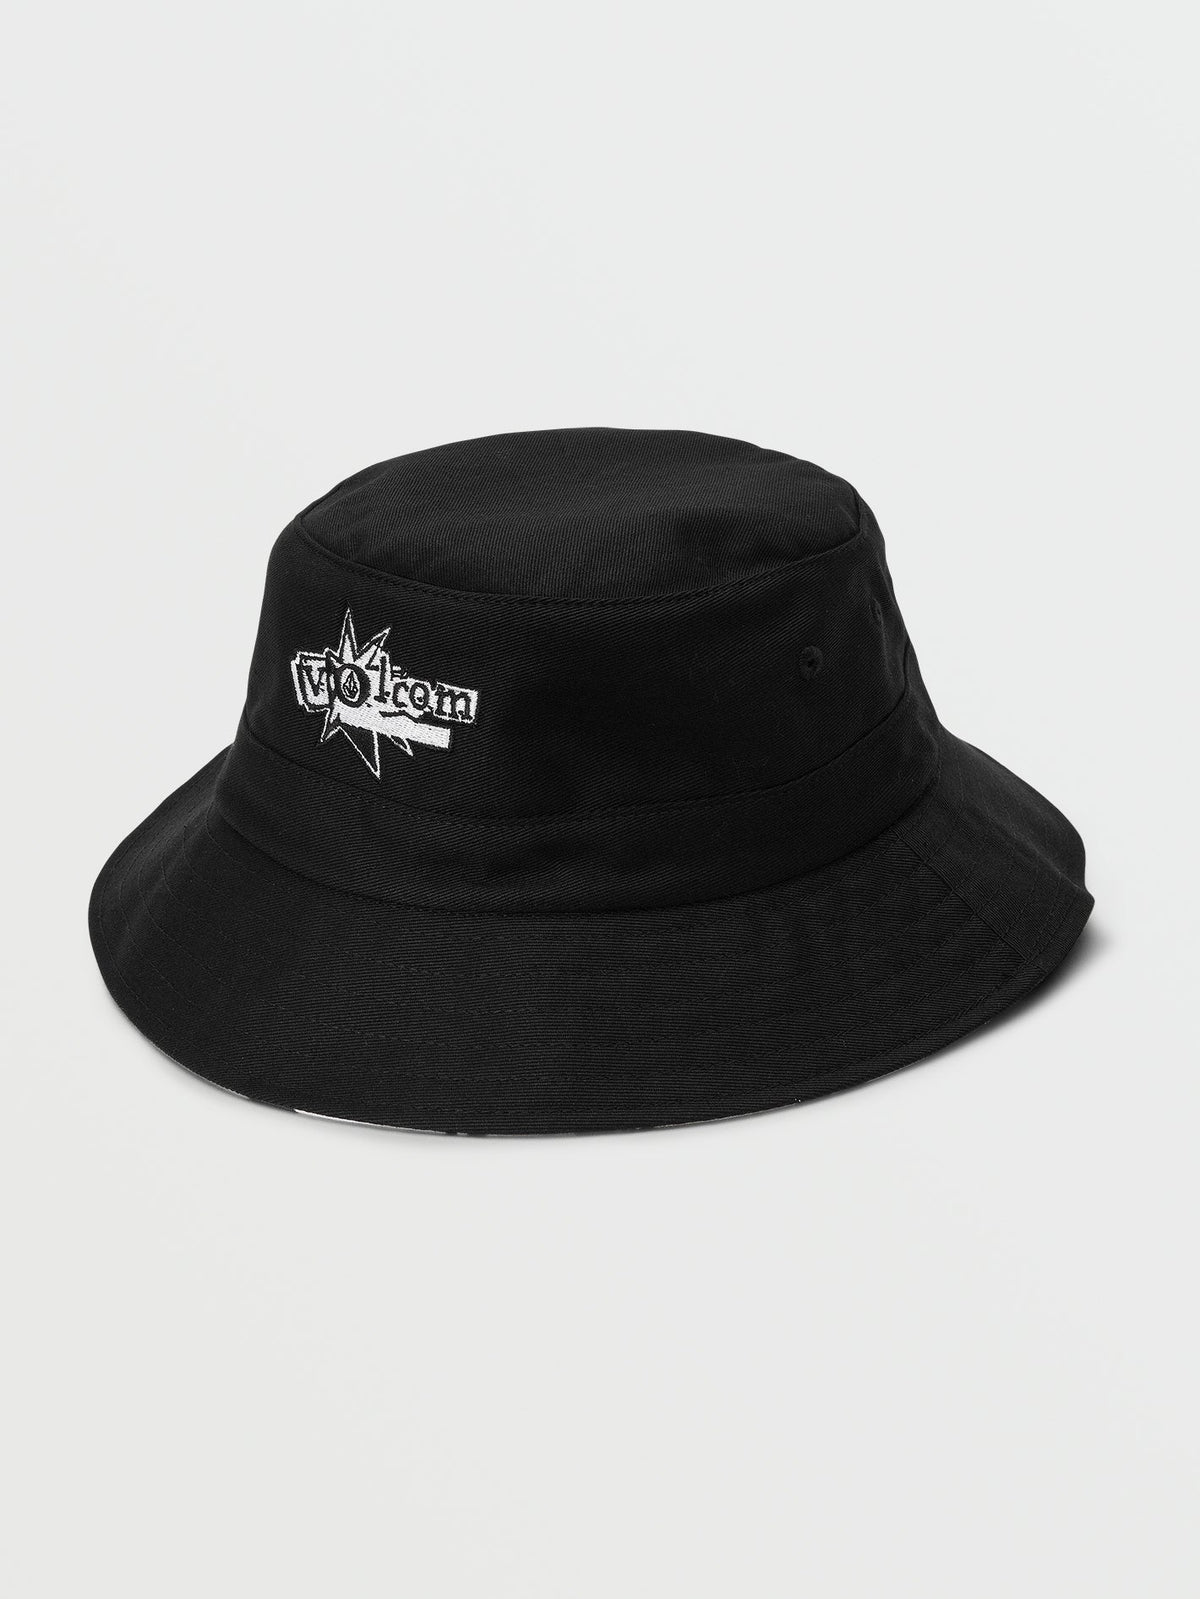 Volcom Entertainment Men's Bucket Hat Black Combo